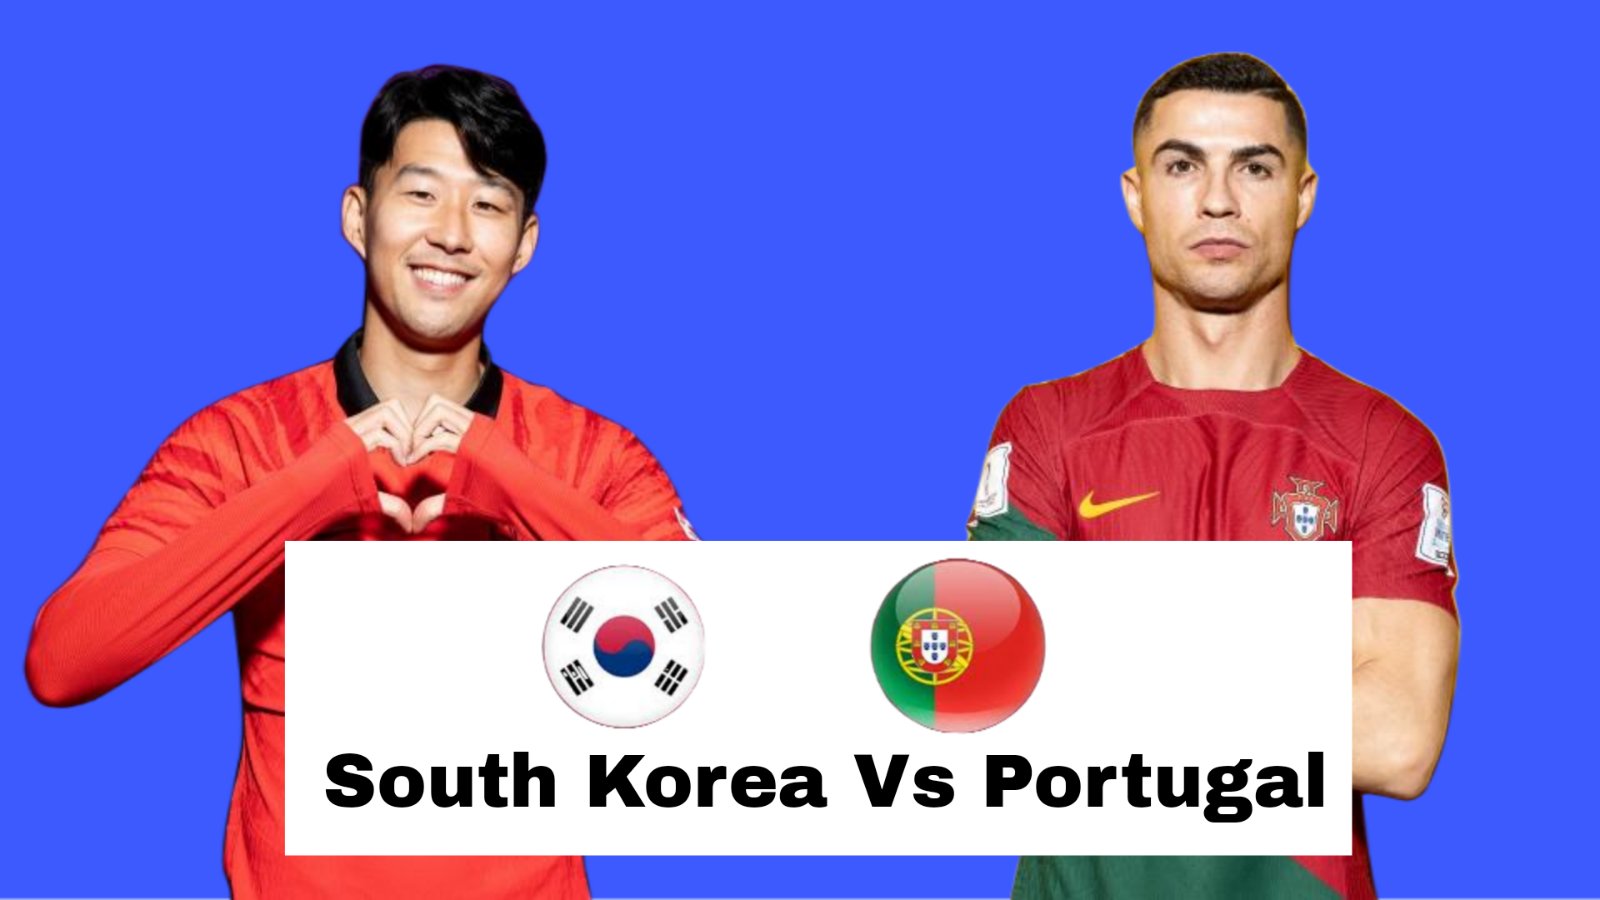 South Korea vs Portugal live streaming